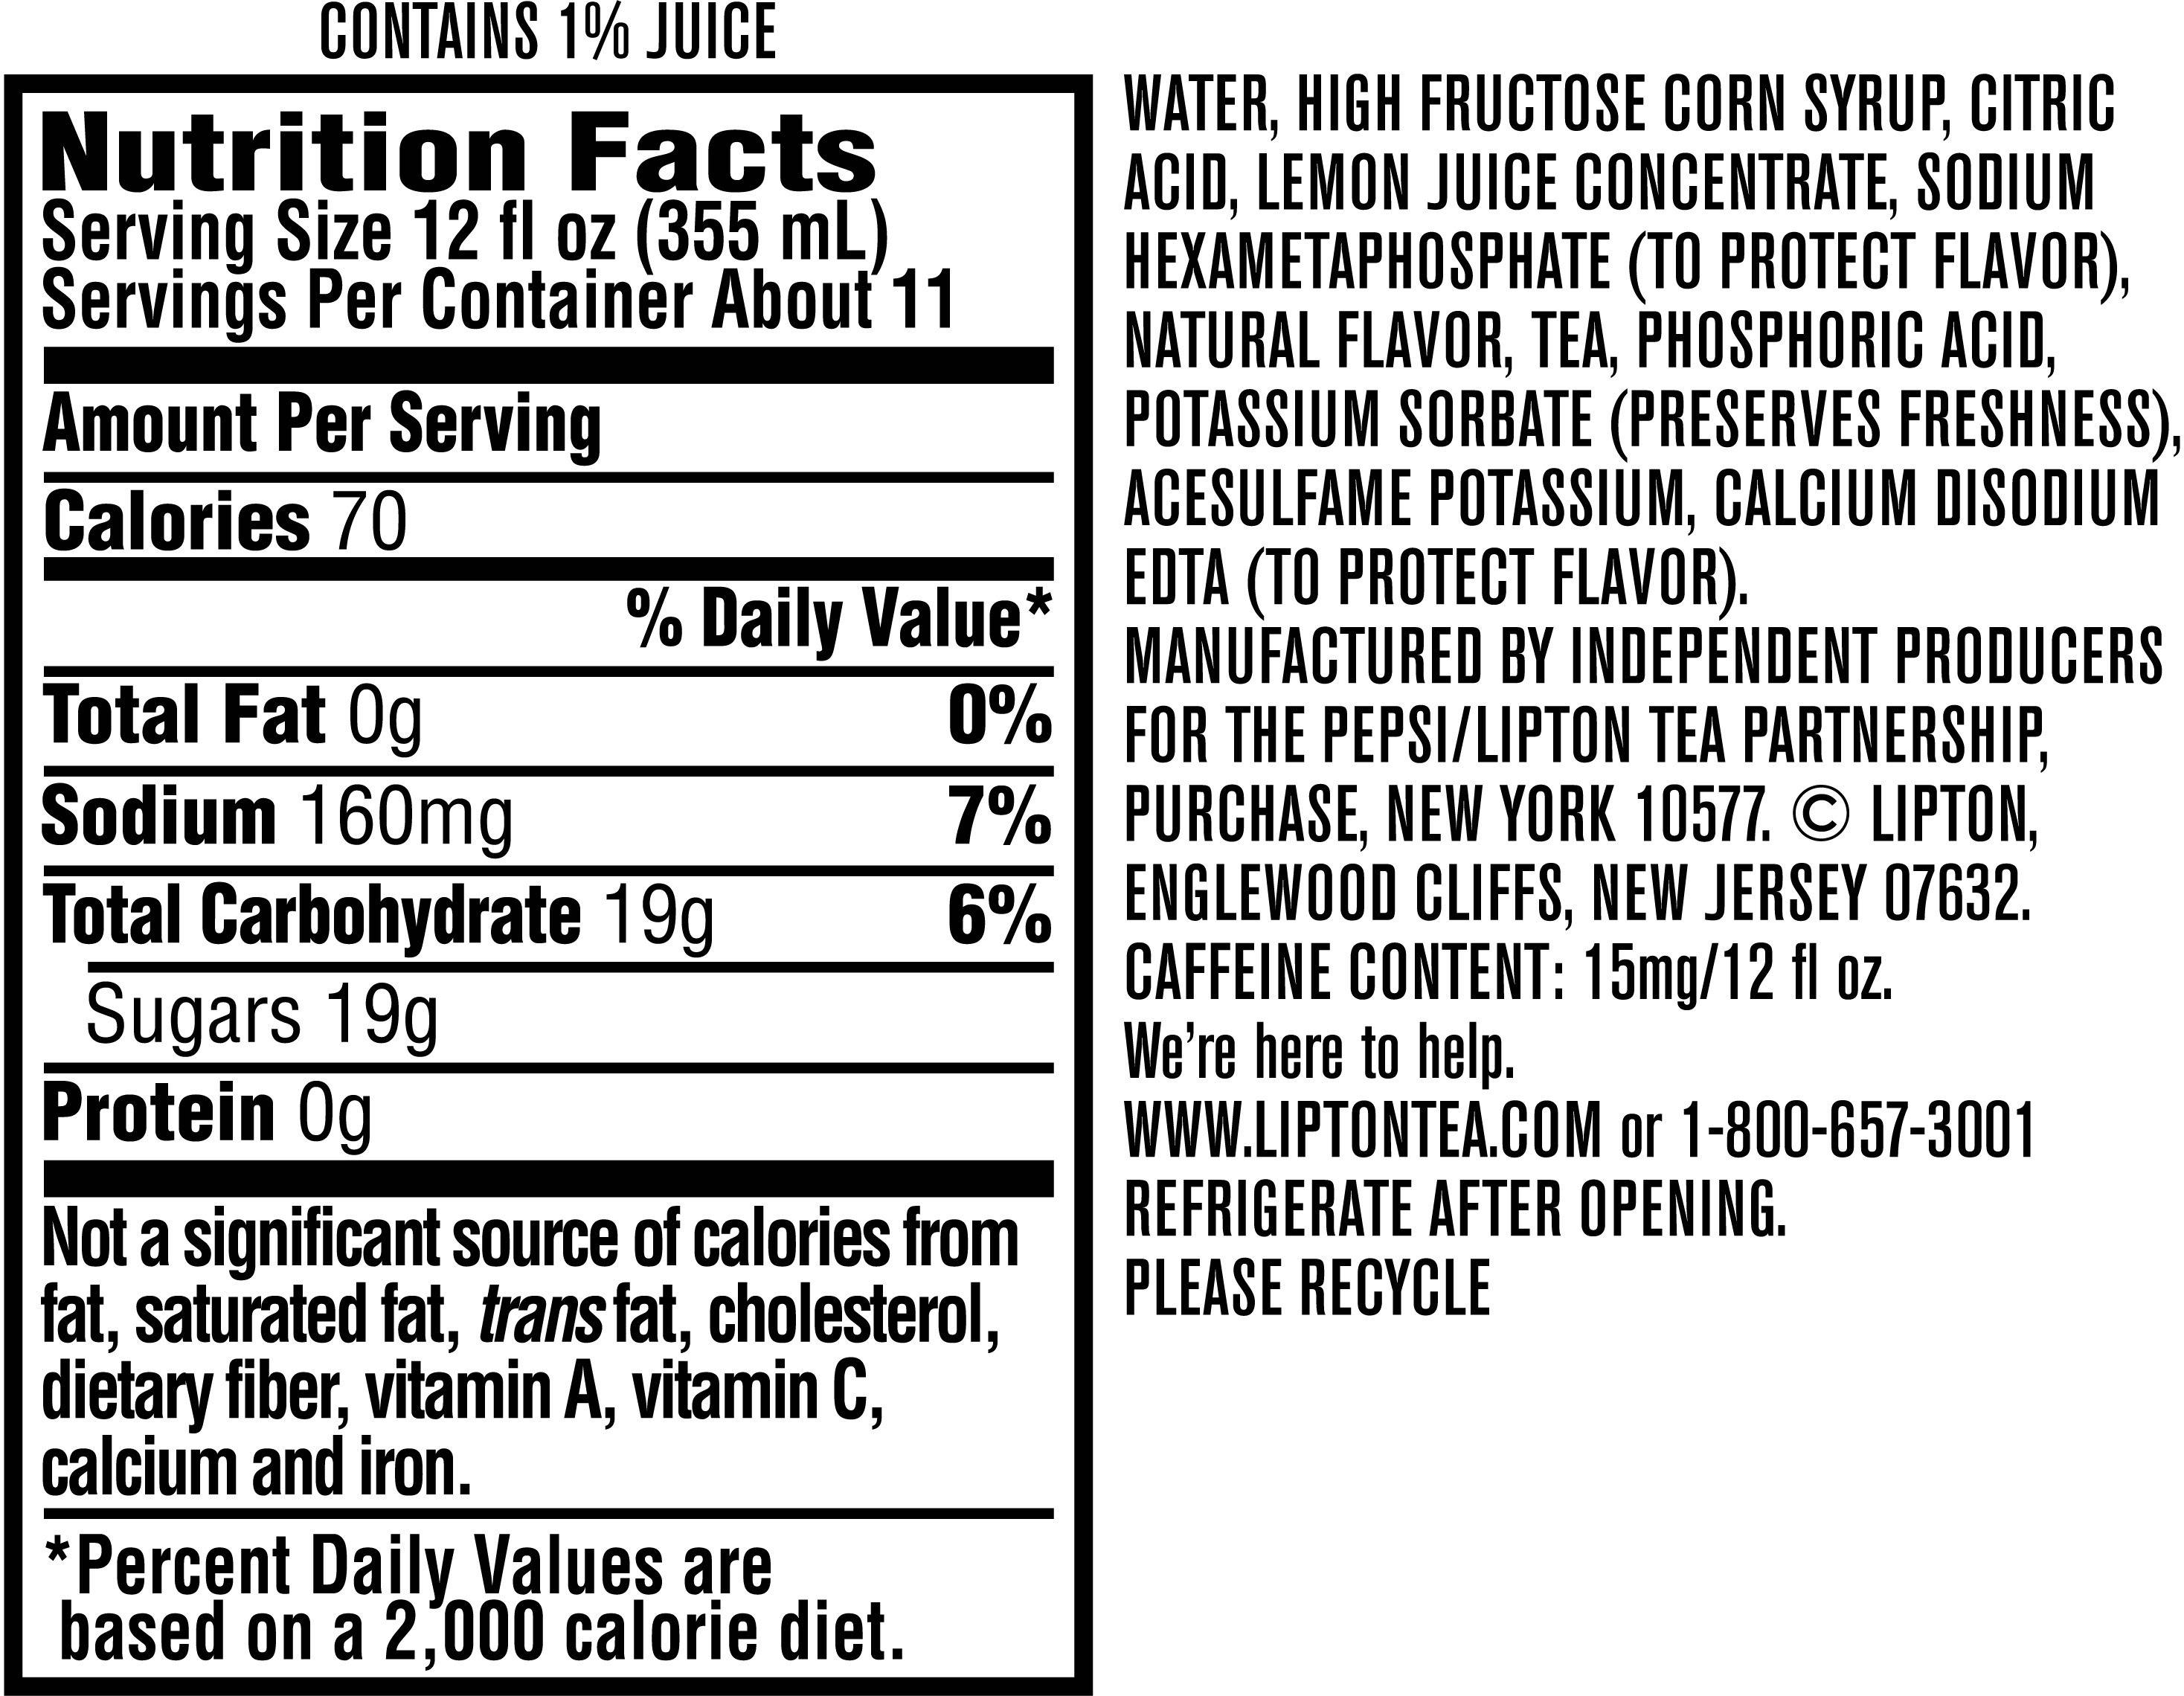 Image describing nutrition information for product Lipton Iced Tea Lemon